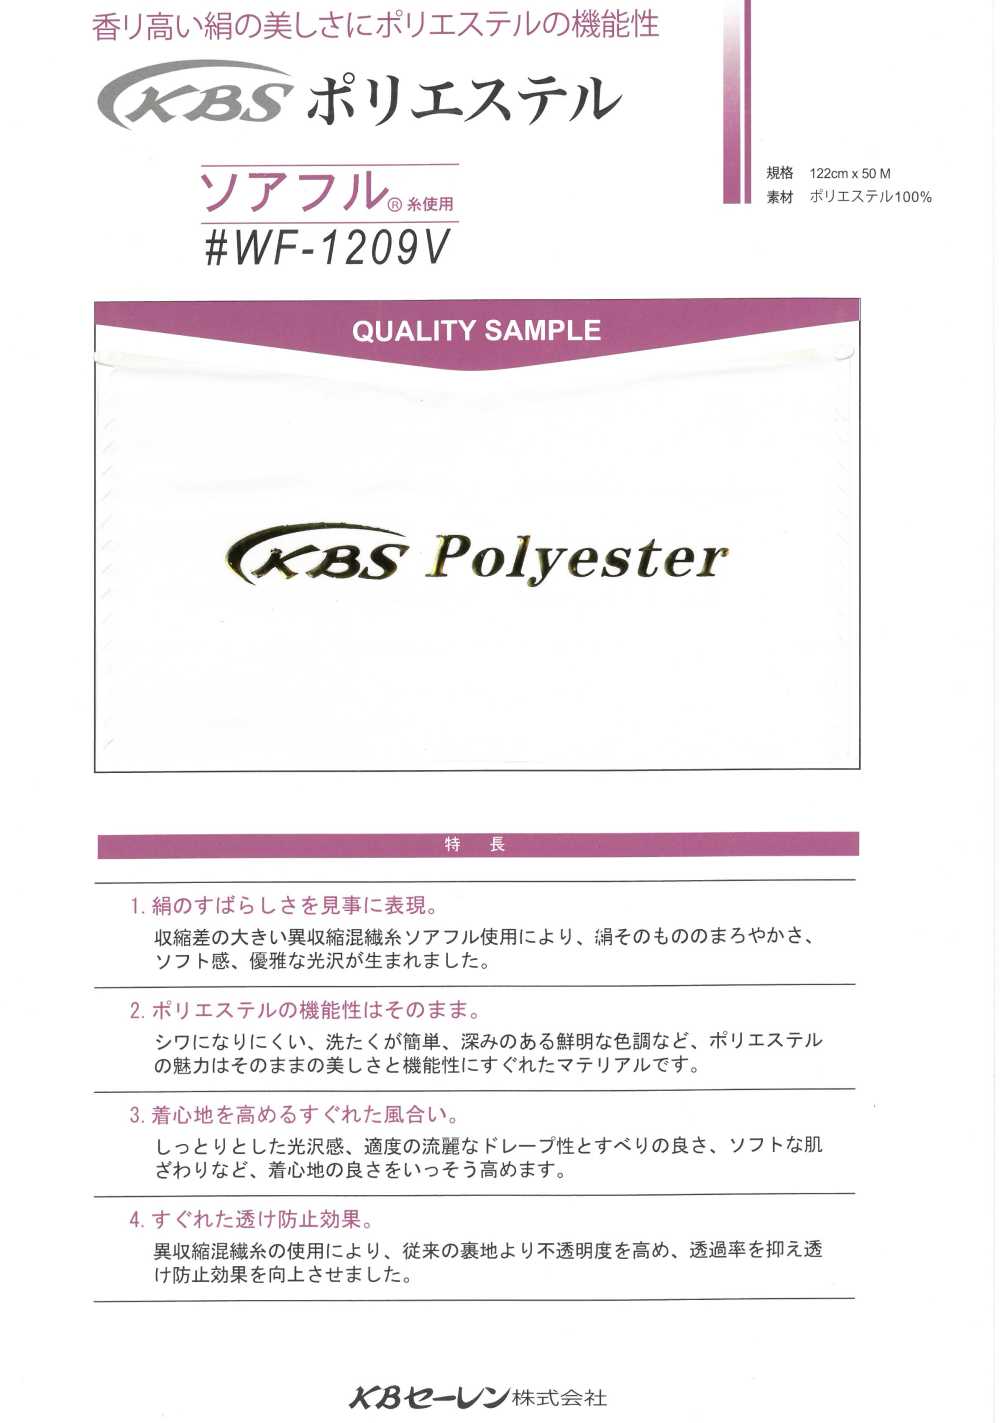 WF1209V Soaful® Polyester Lining